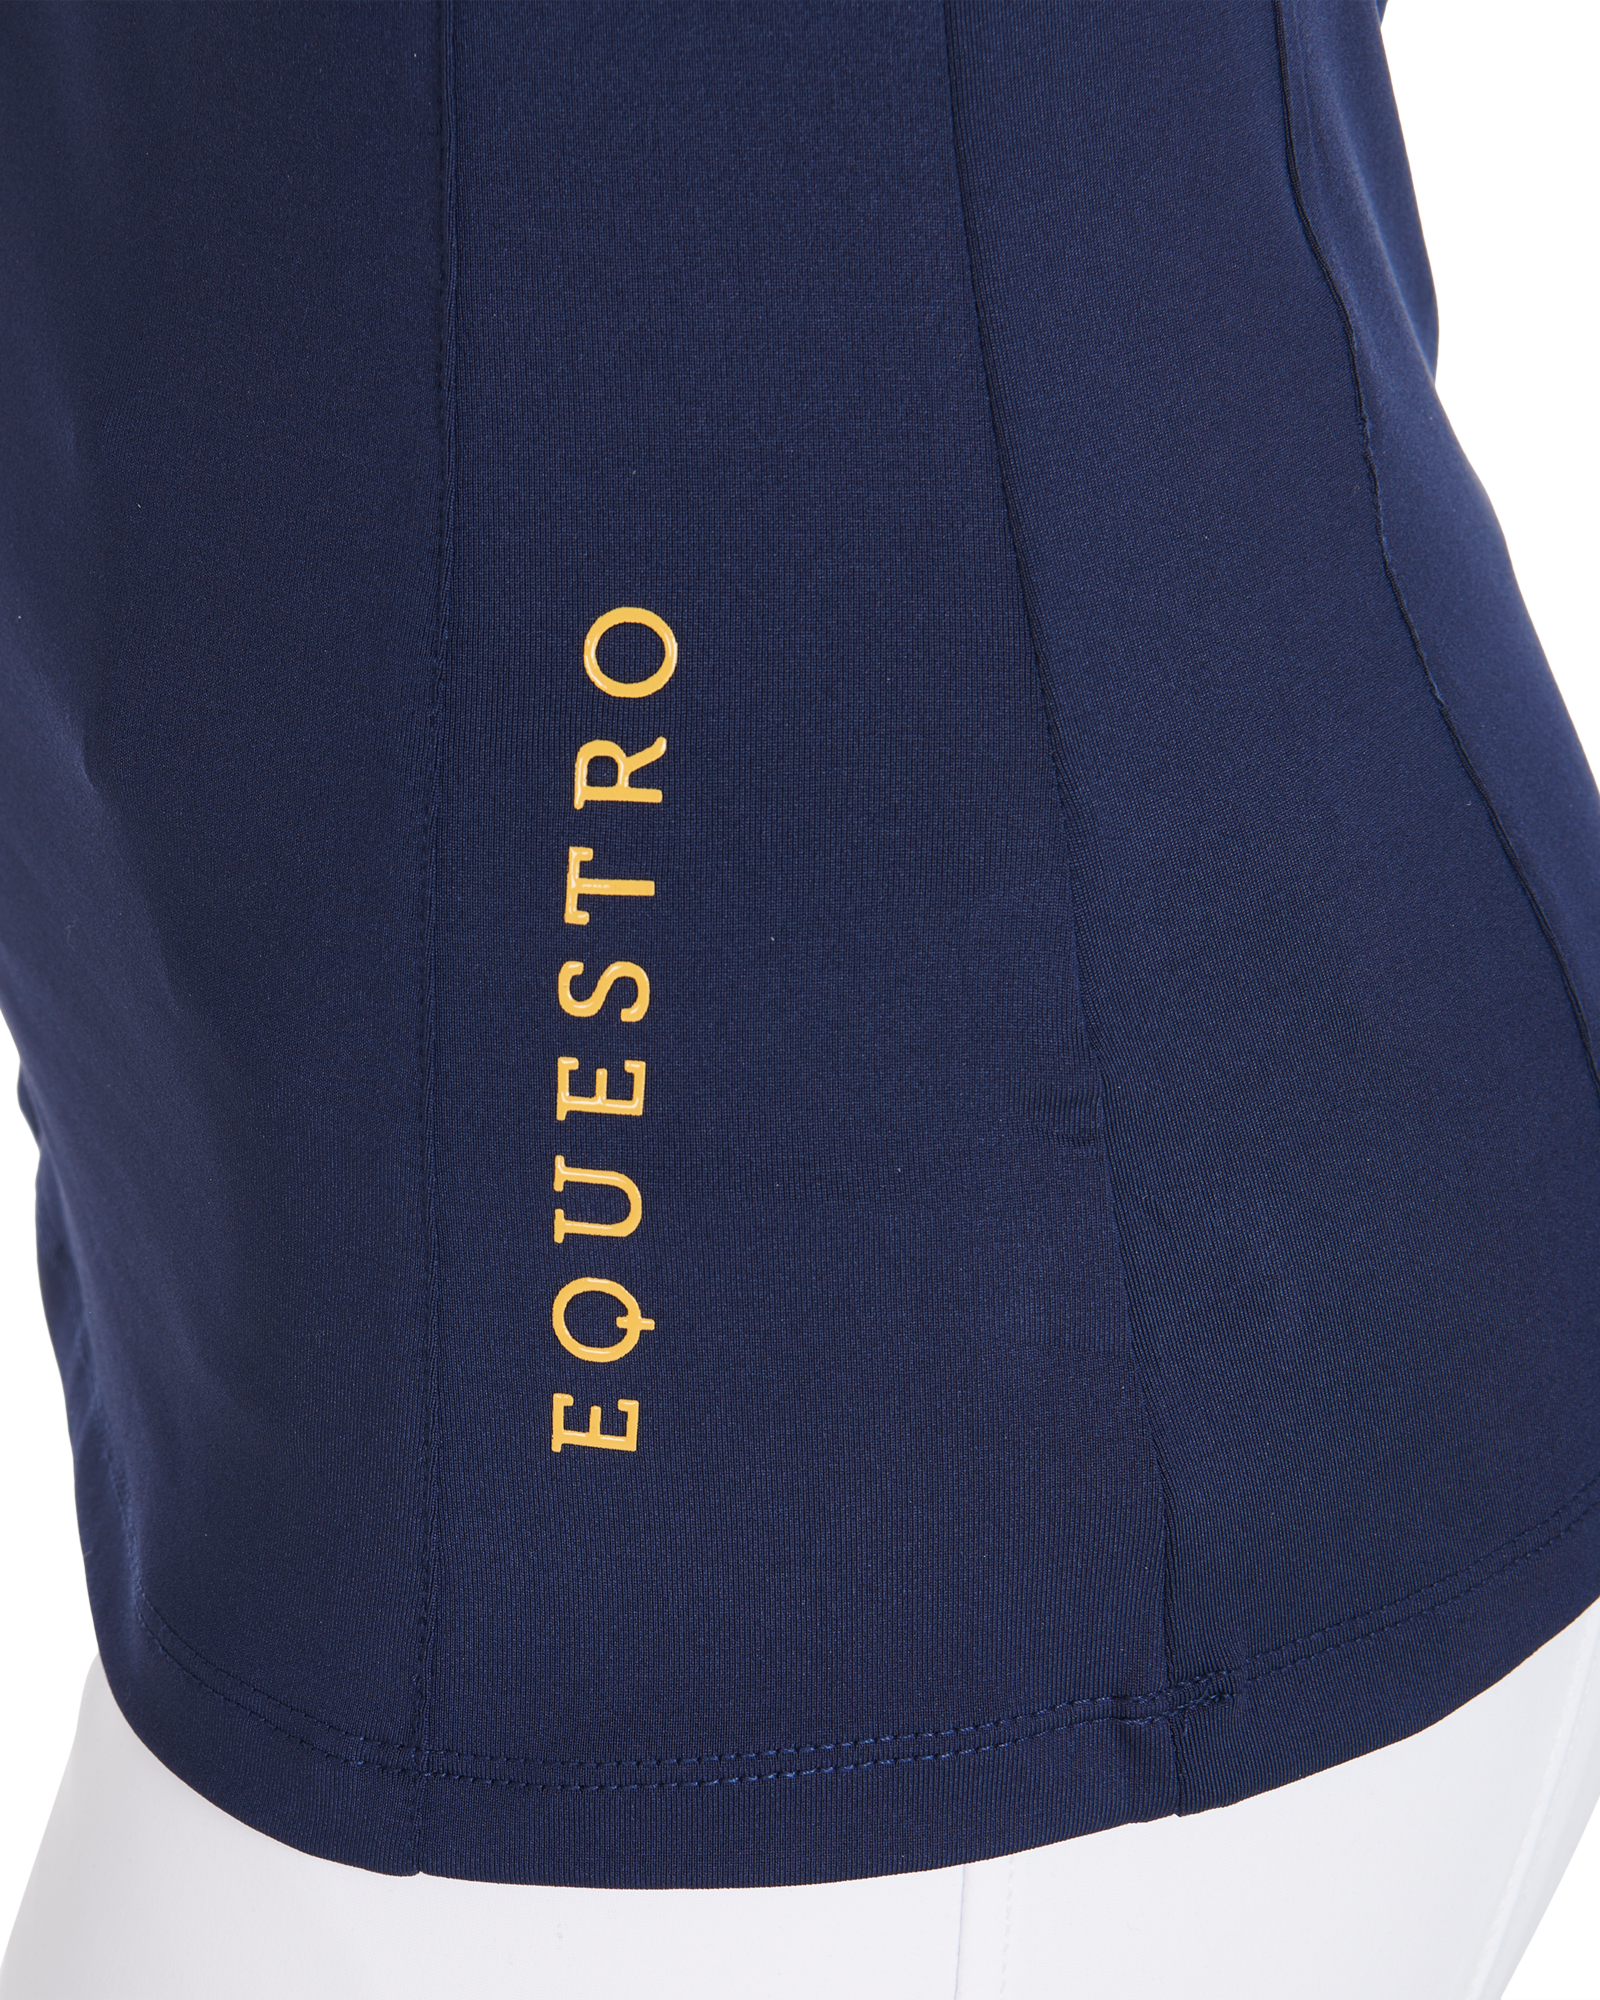 Equestro Funktions-Shirt Kurzarm